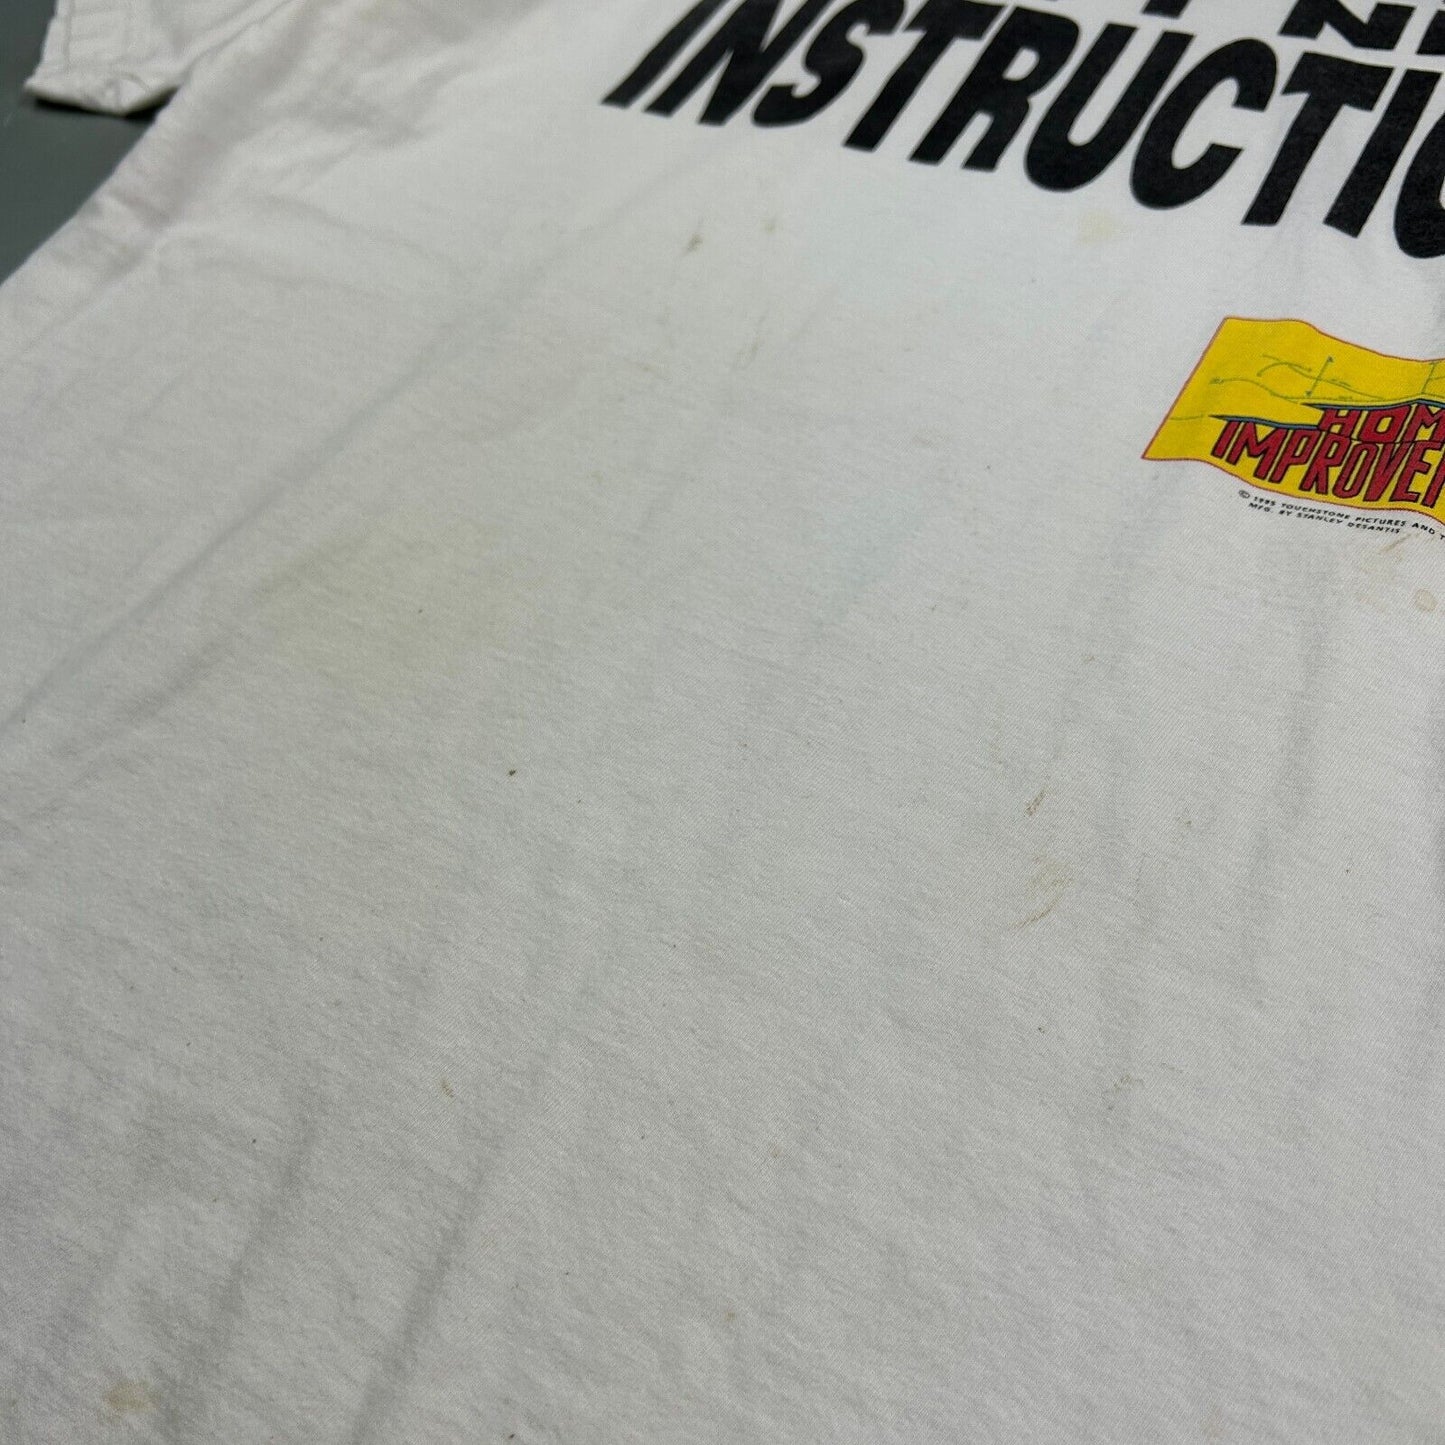 VINTAGE 1995 | Real Men Dont Need Instructions Home Improvement T-Shirt sz XL